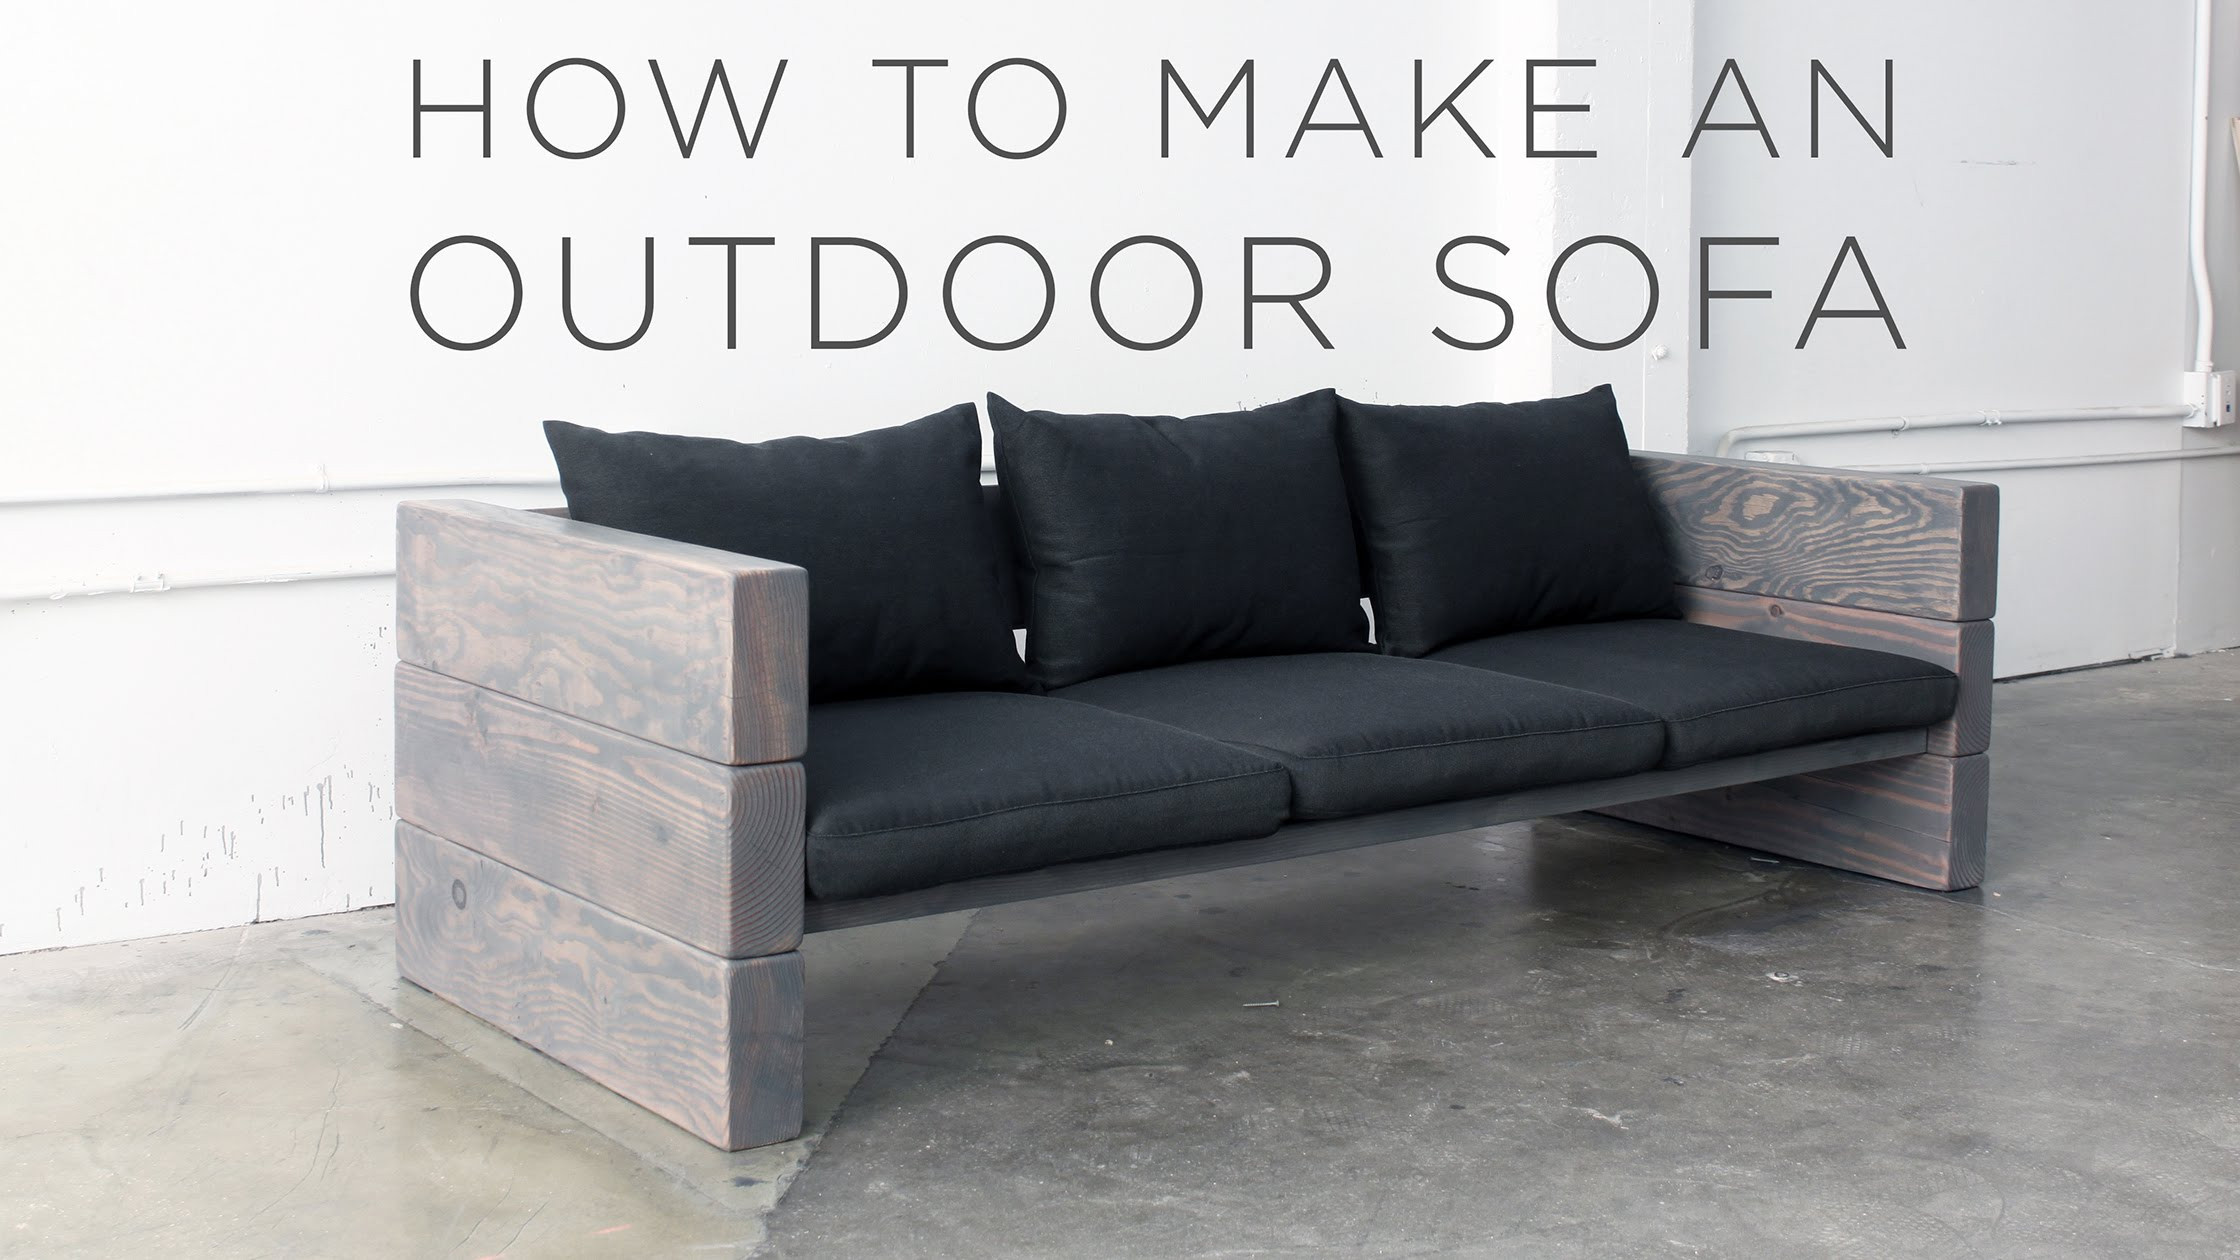 DIY Outdoor Sectional Plans
 Furniture Inspiring Patio Furniture Design Ideas With Diy